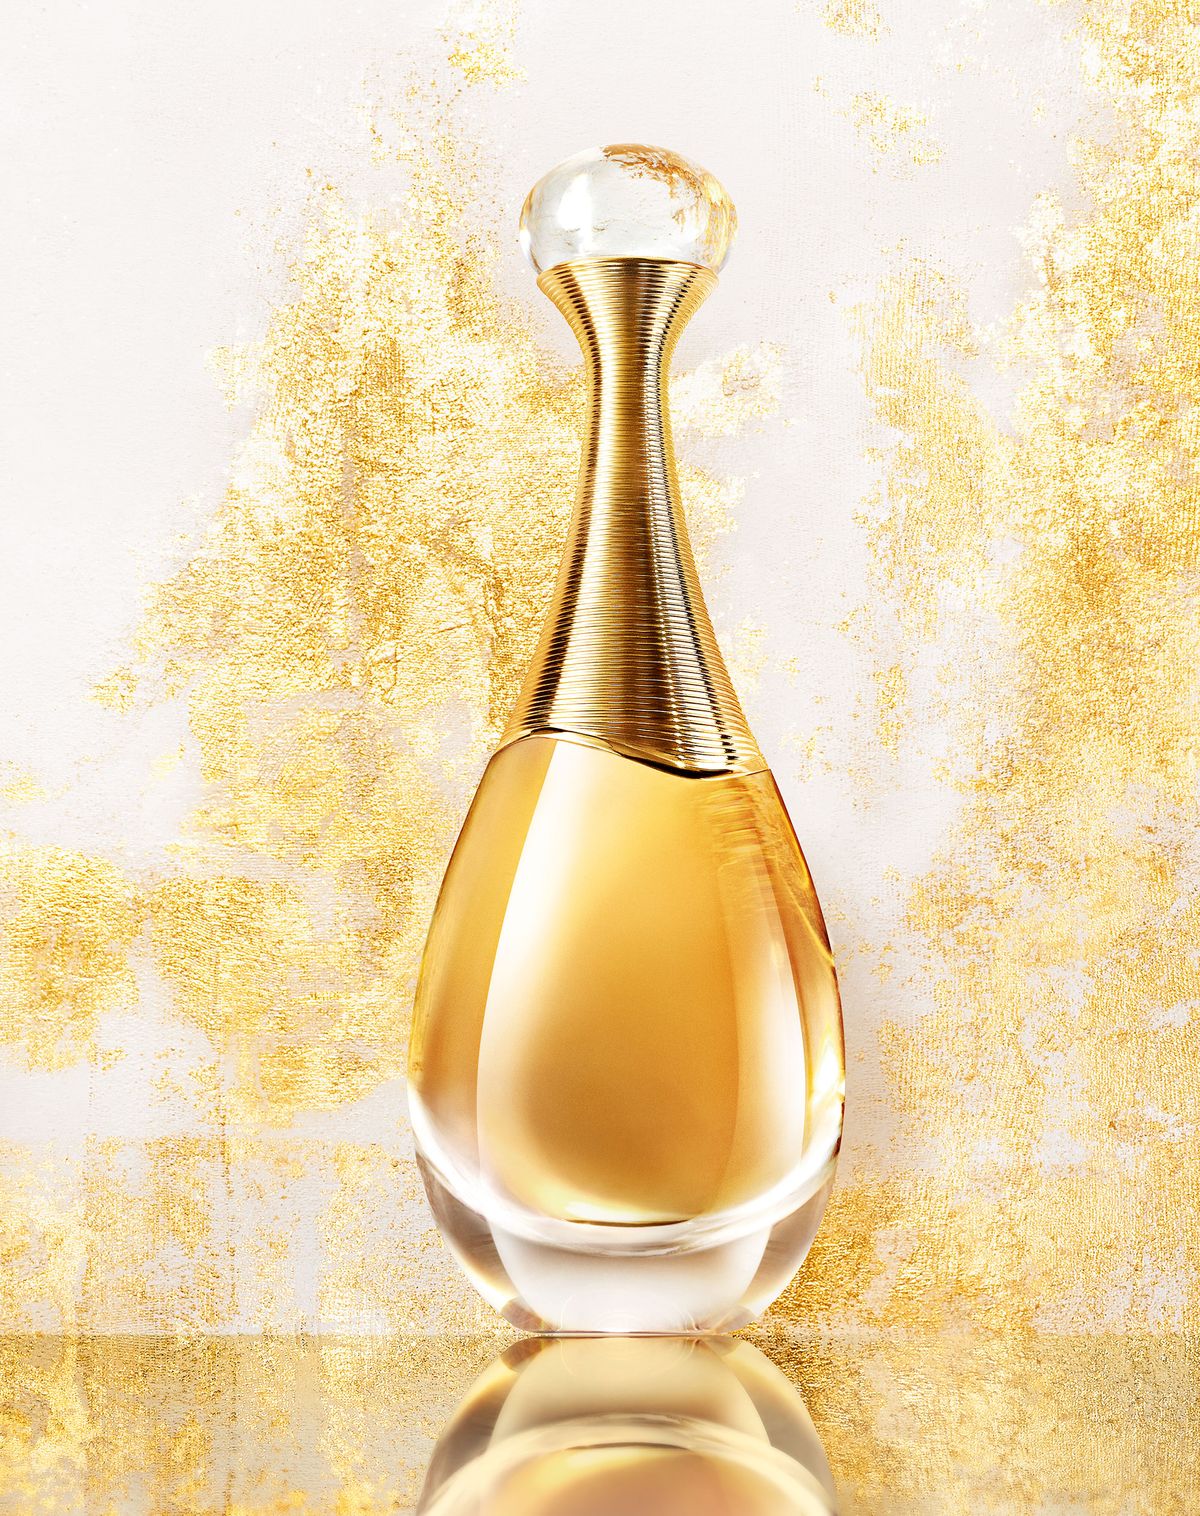 dior perfume advert 2018